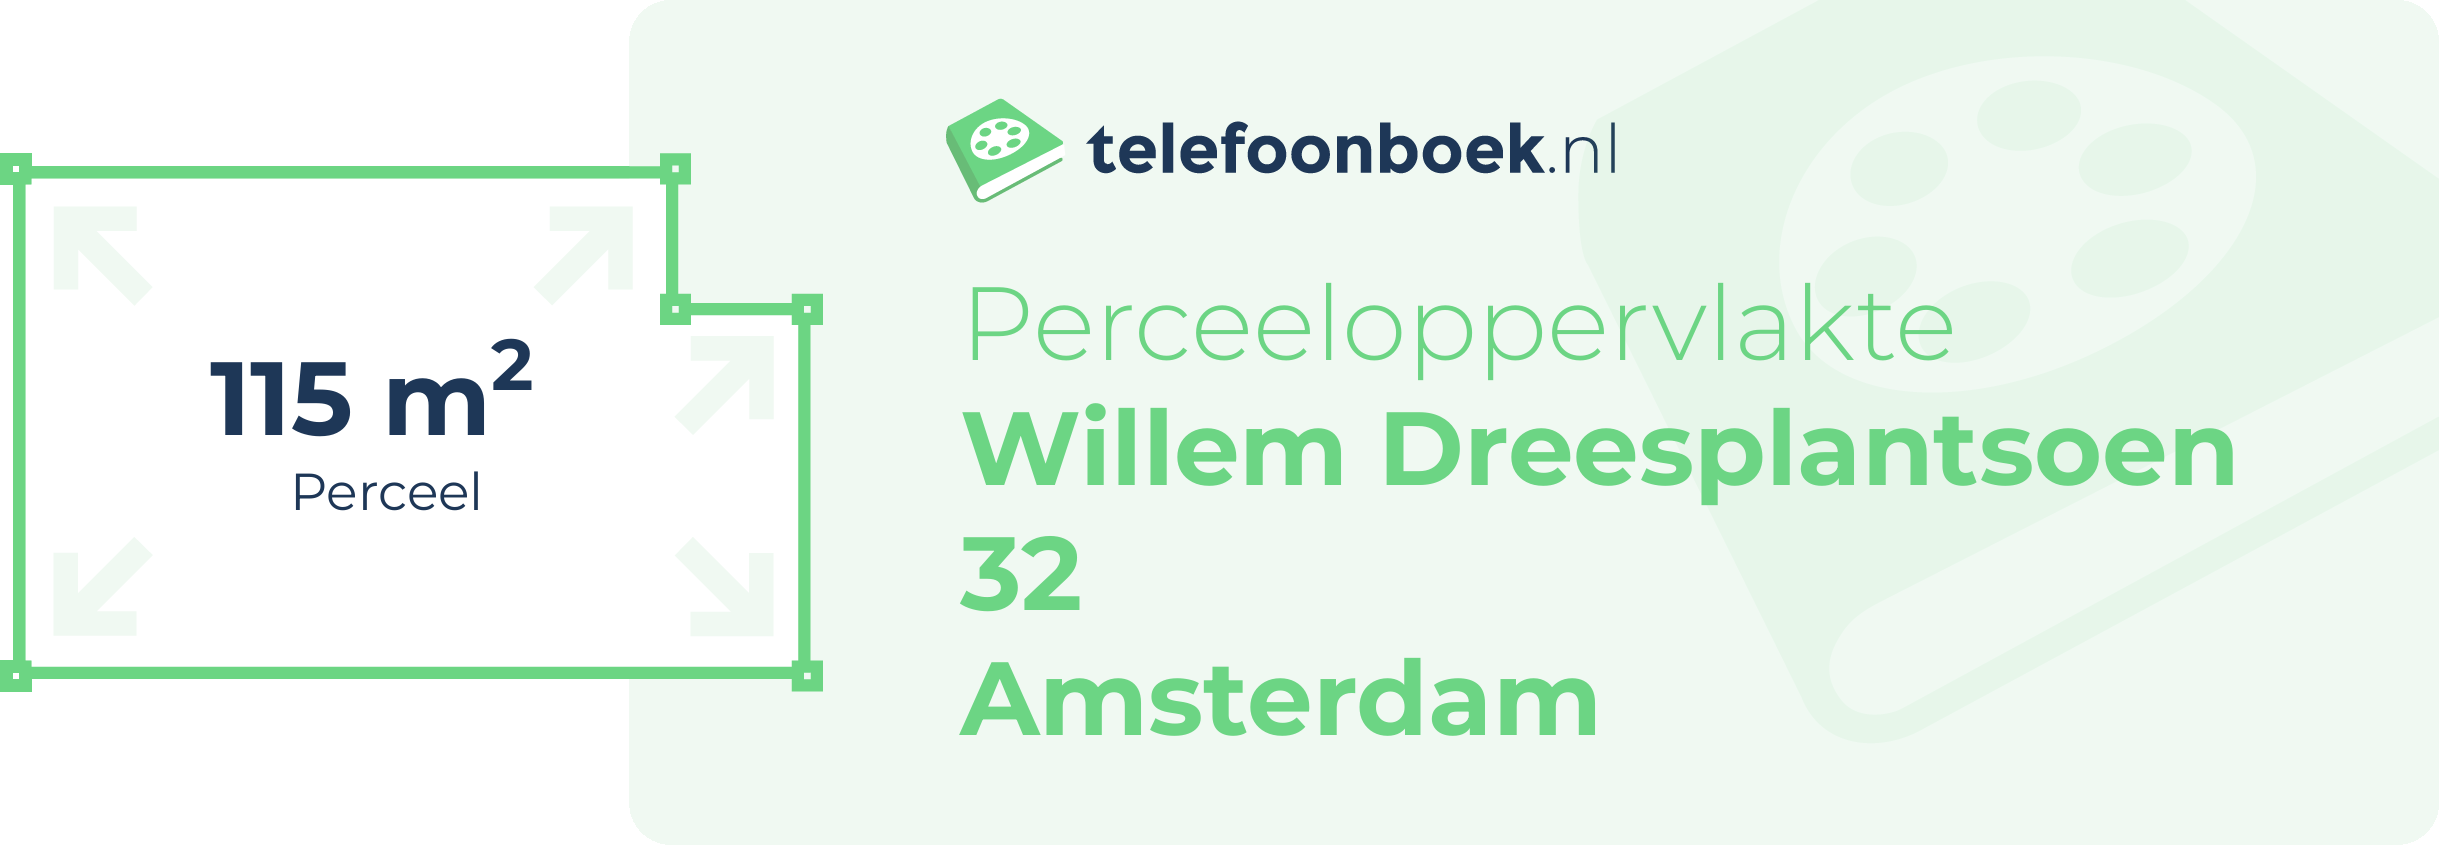 Perceeloppervlakte Willem Dreesplantsoen 32 Amsterdam